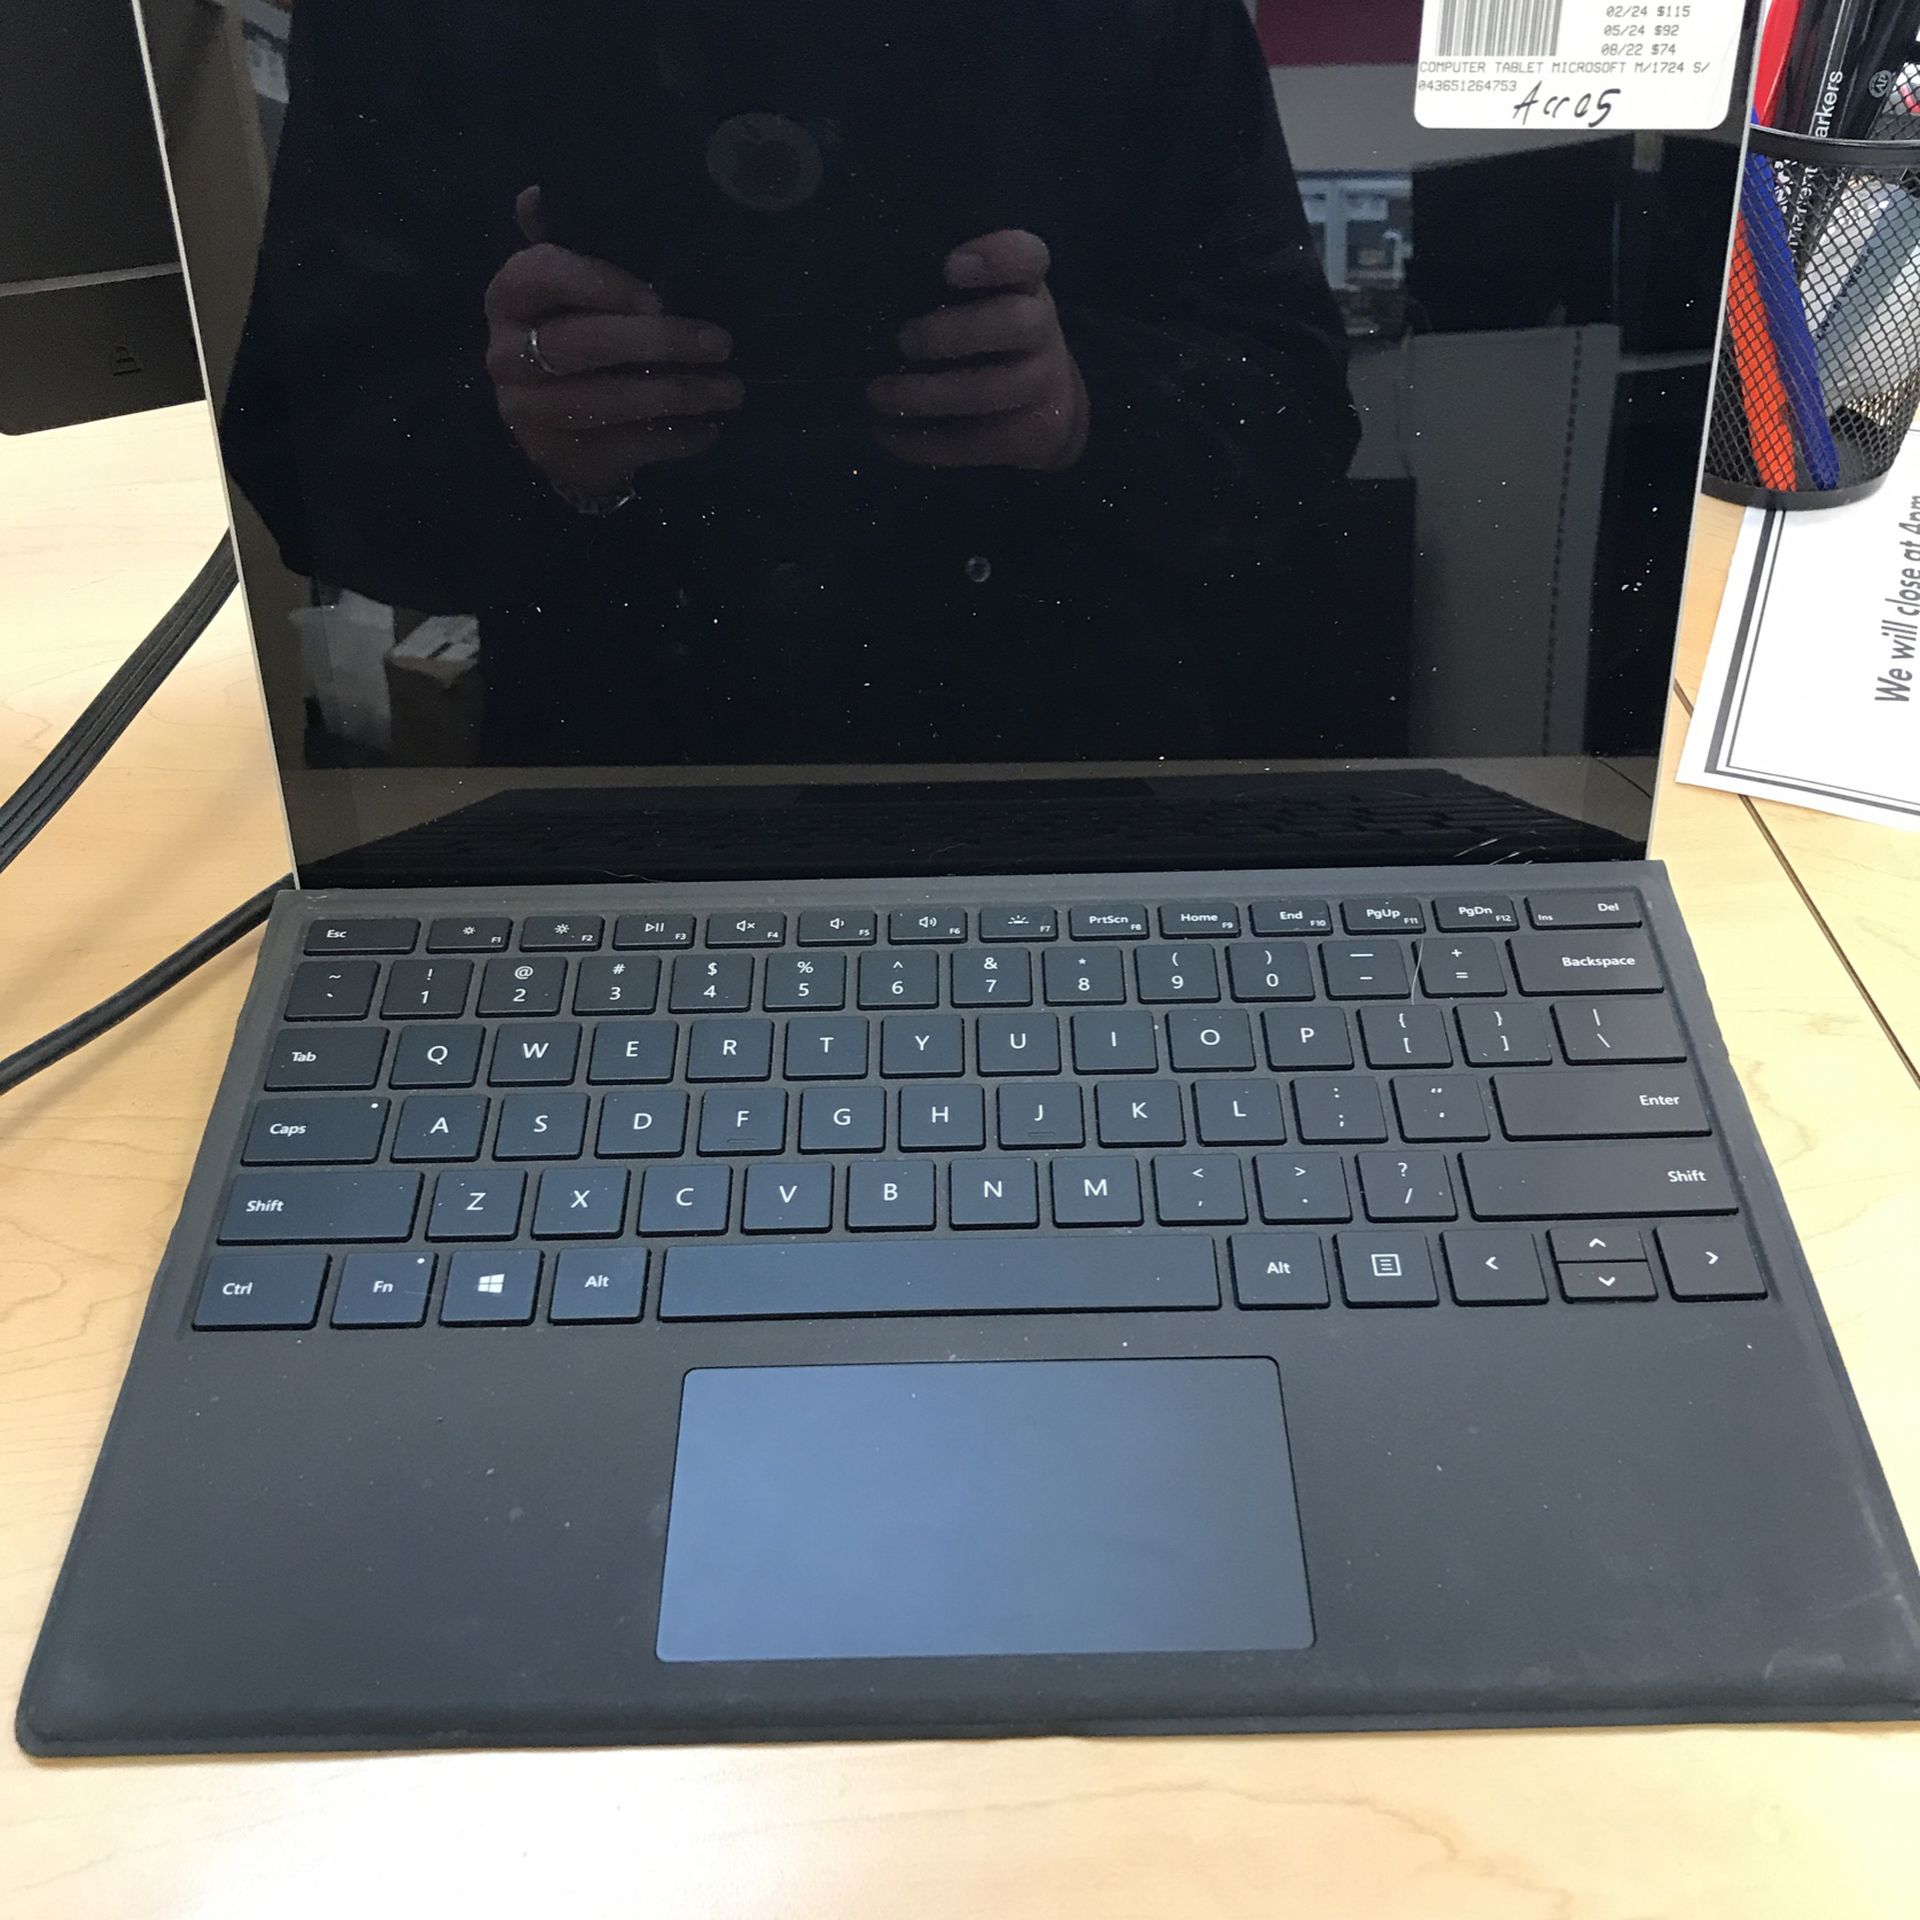 Microsoft Surface Tablet Model:1724